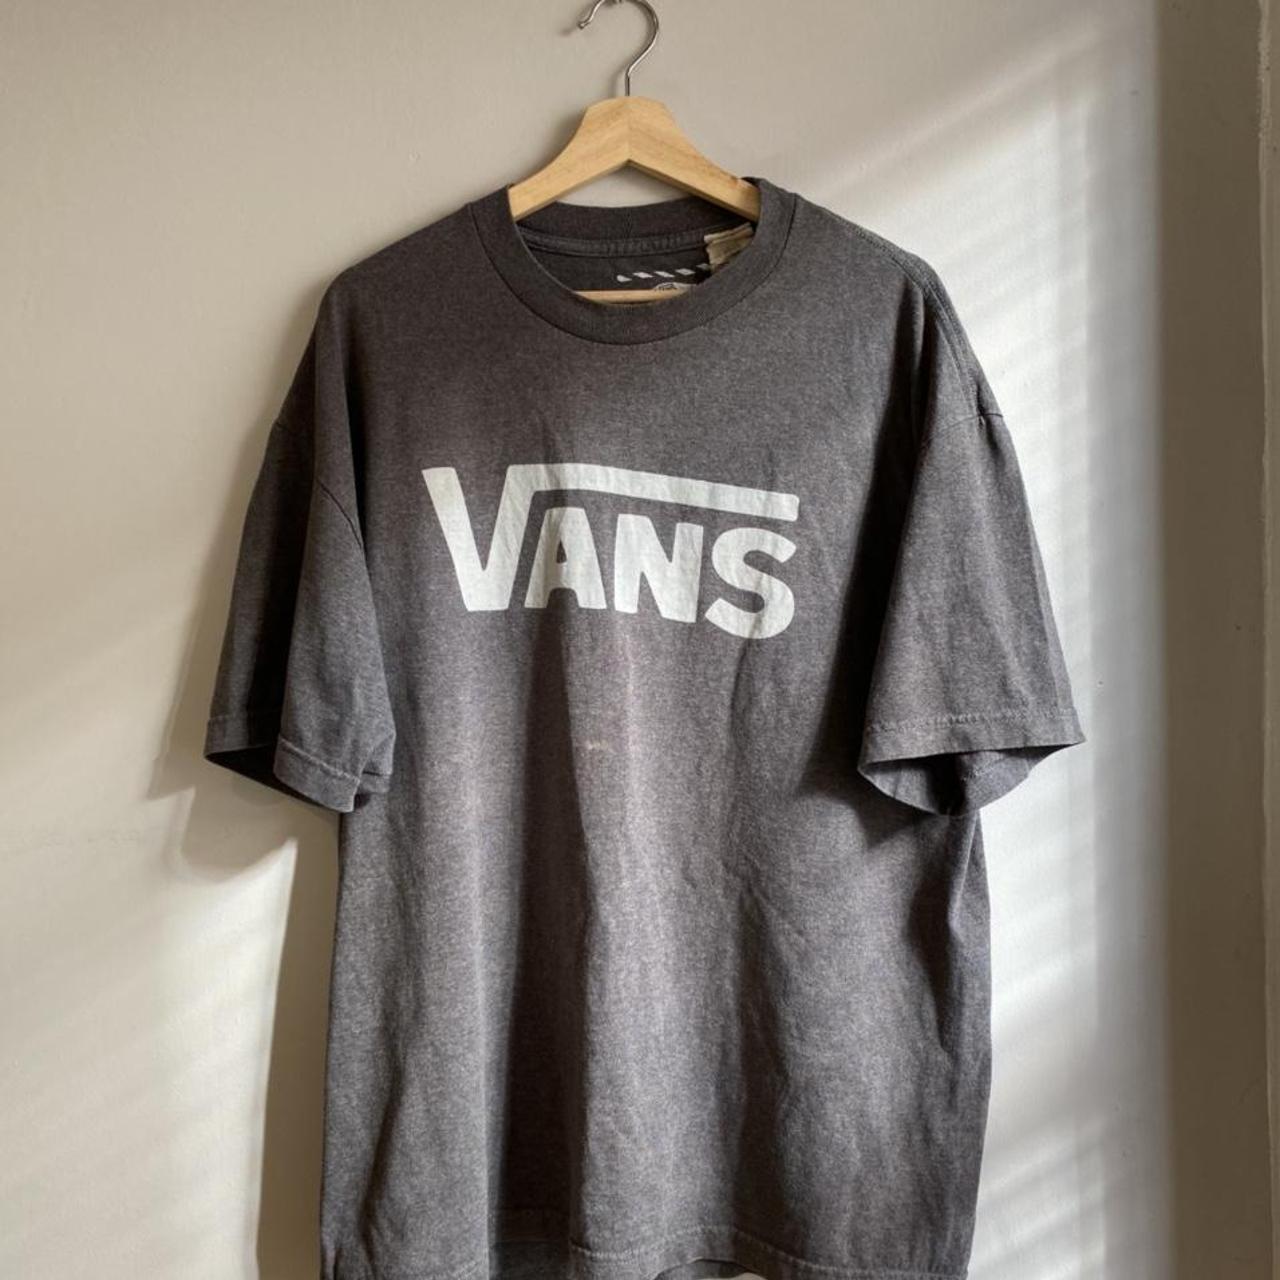 Vans Men's Grey and White T-shirt | Depop